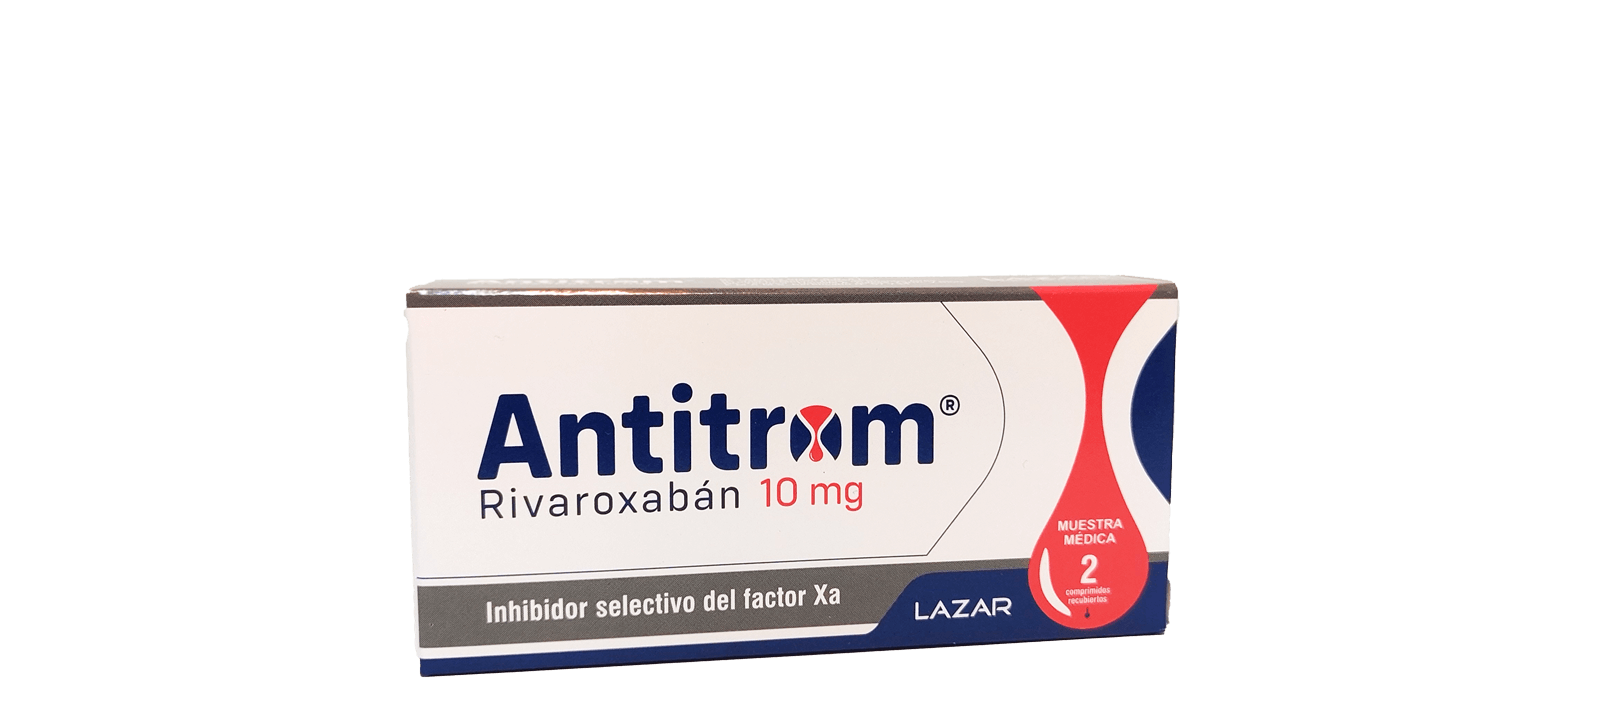 antitrom